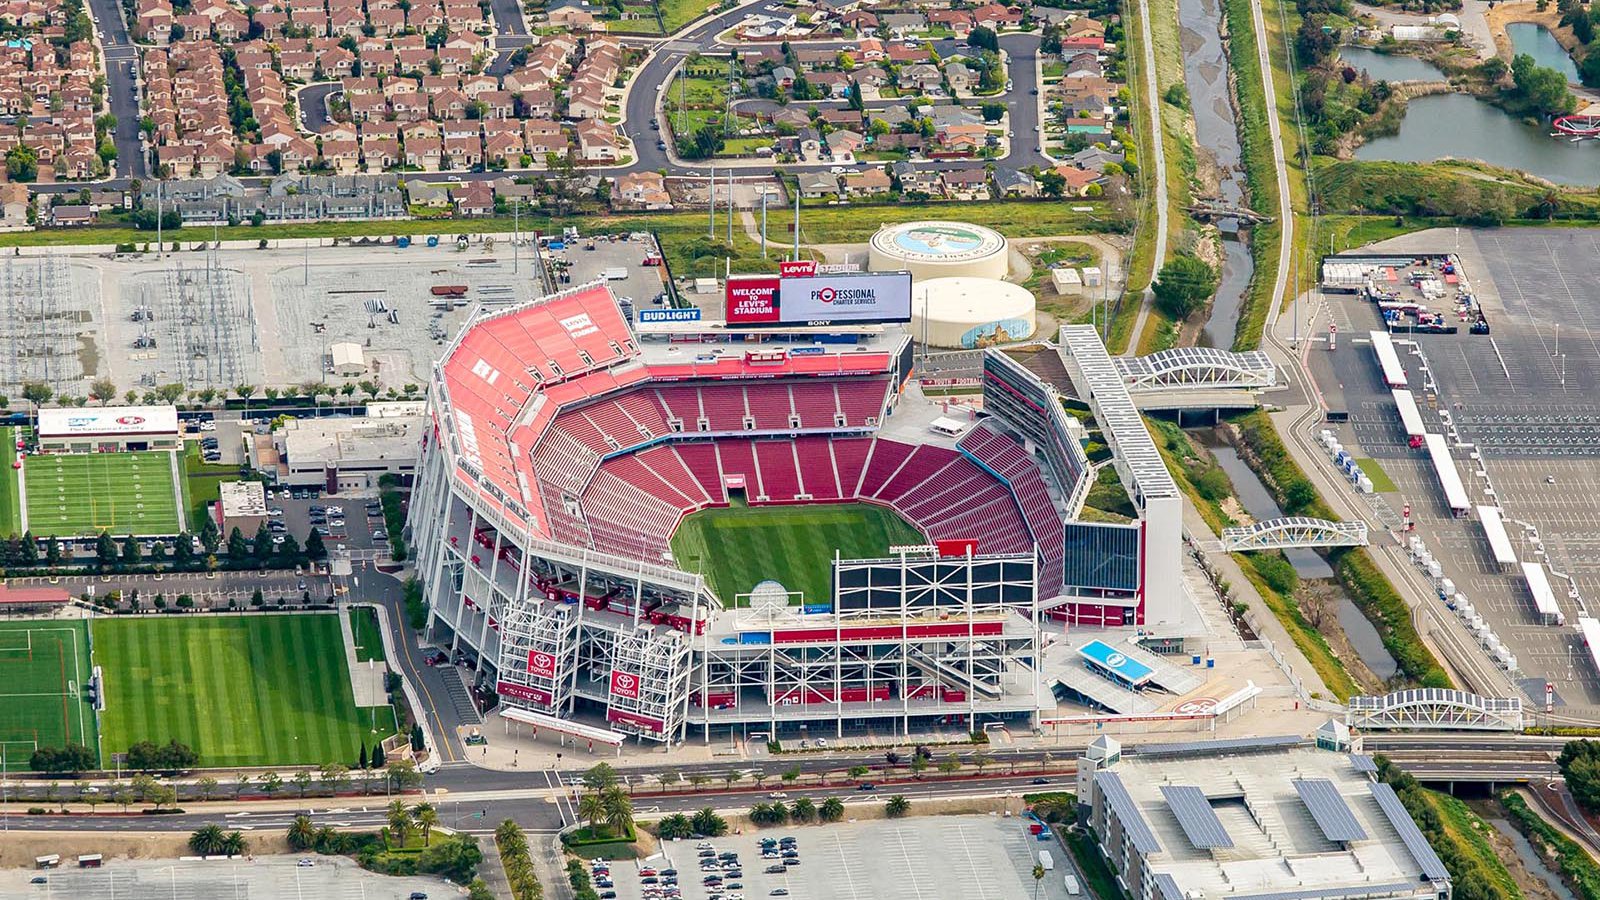 Sports image of Levi's Stadium home of the 49ers football team in Santa Clara, Californa